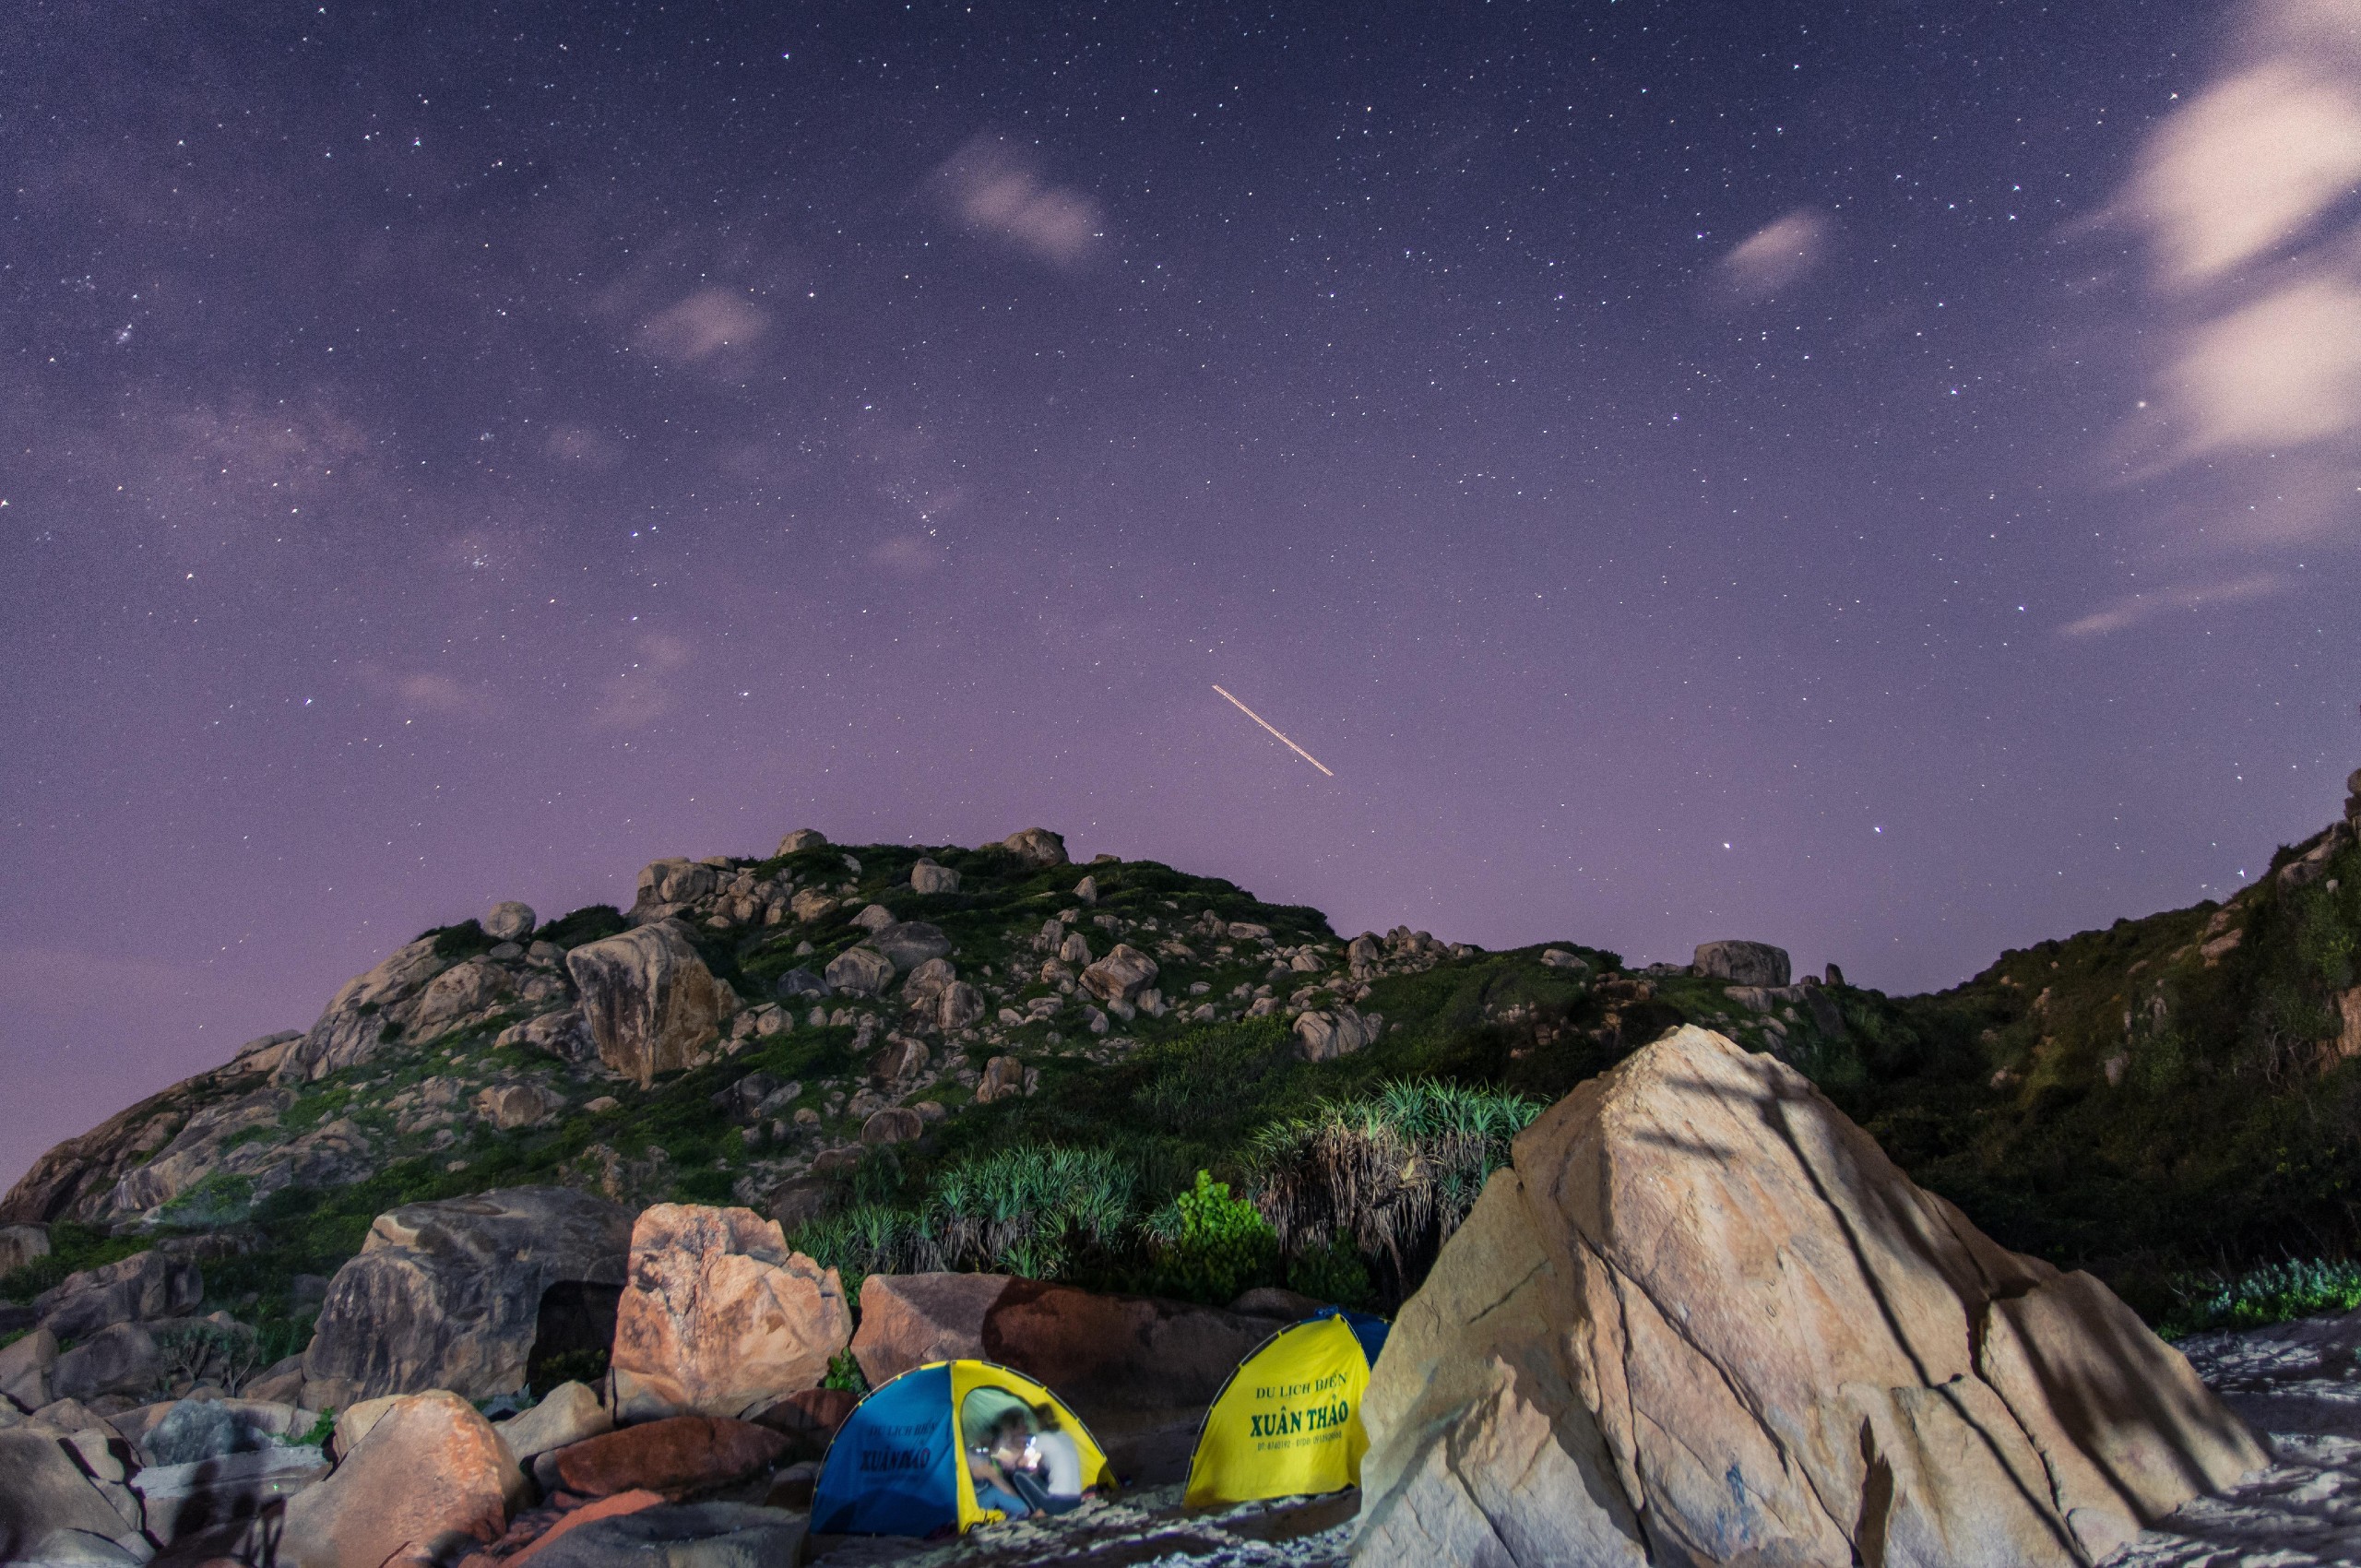 Wilderness campsite under the starry sky